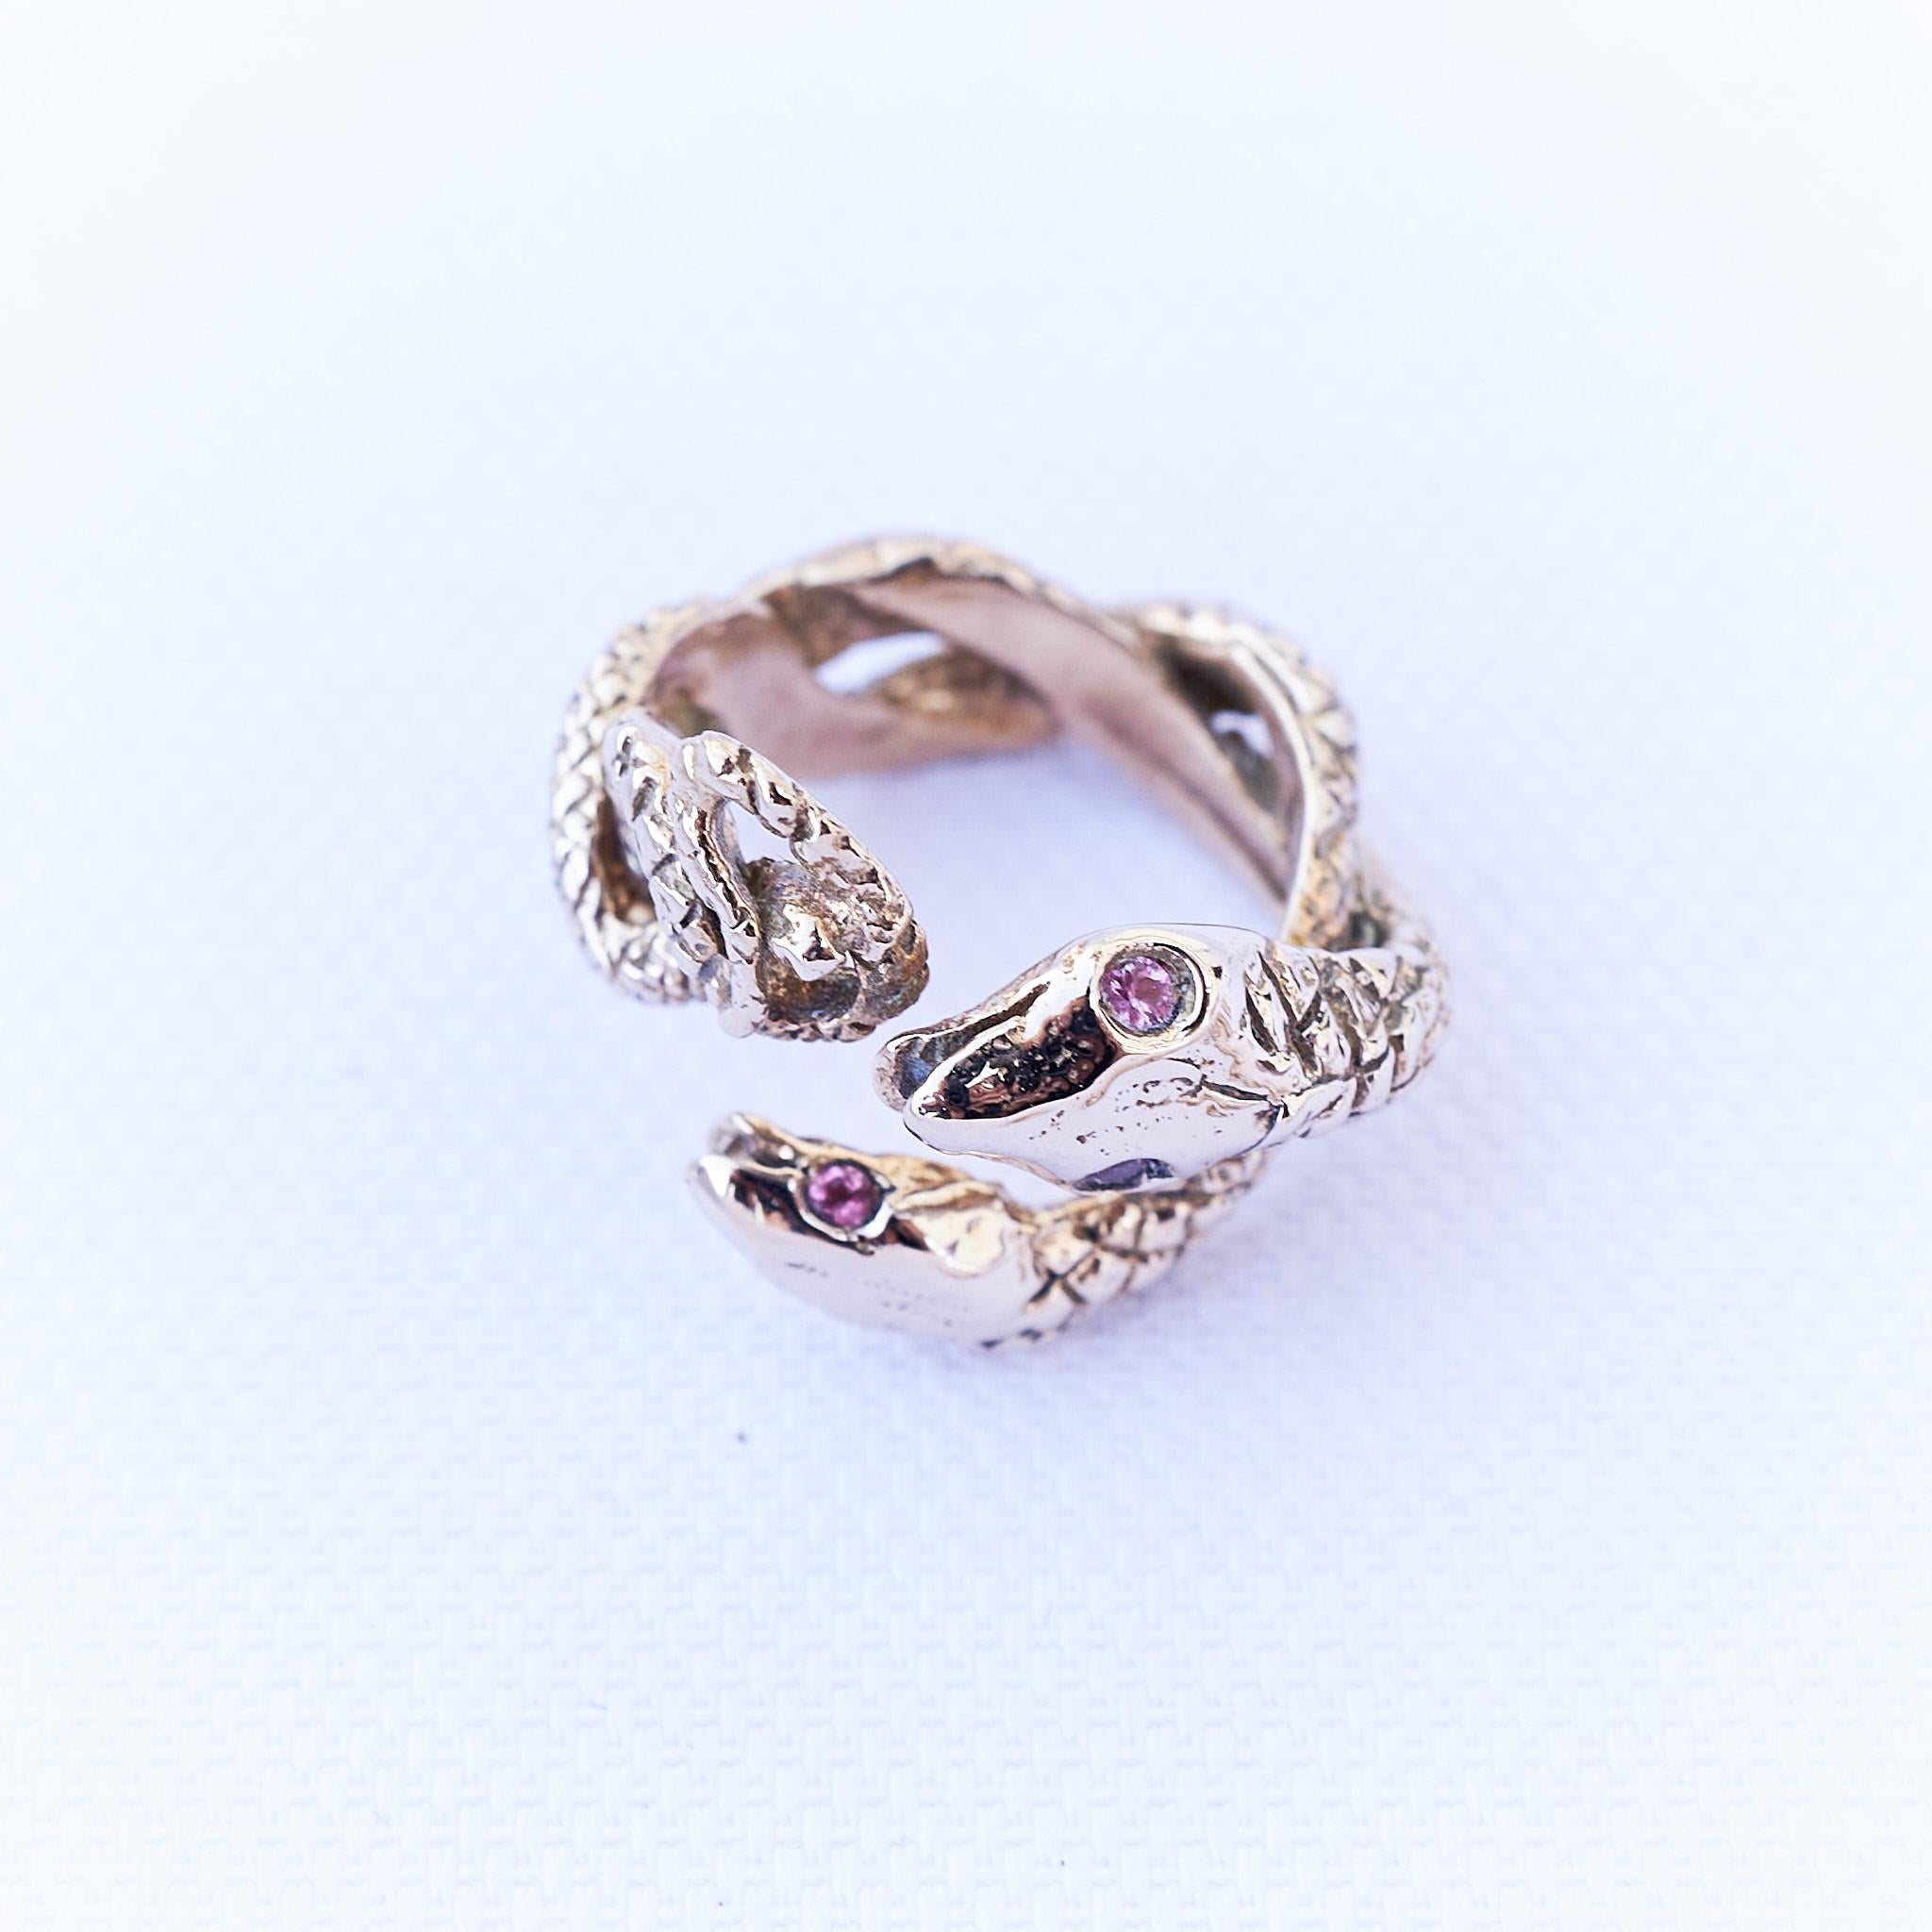 4 Pink Sapphires Eyes on Snake Ring Cocktail Ring Made in Bronze 
Designer: J Dauphin

J DAUPHIN 